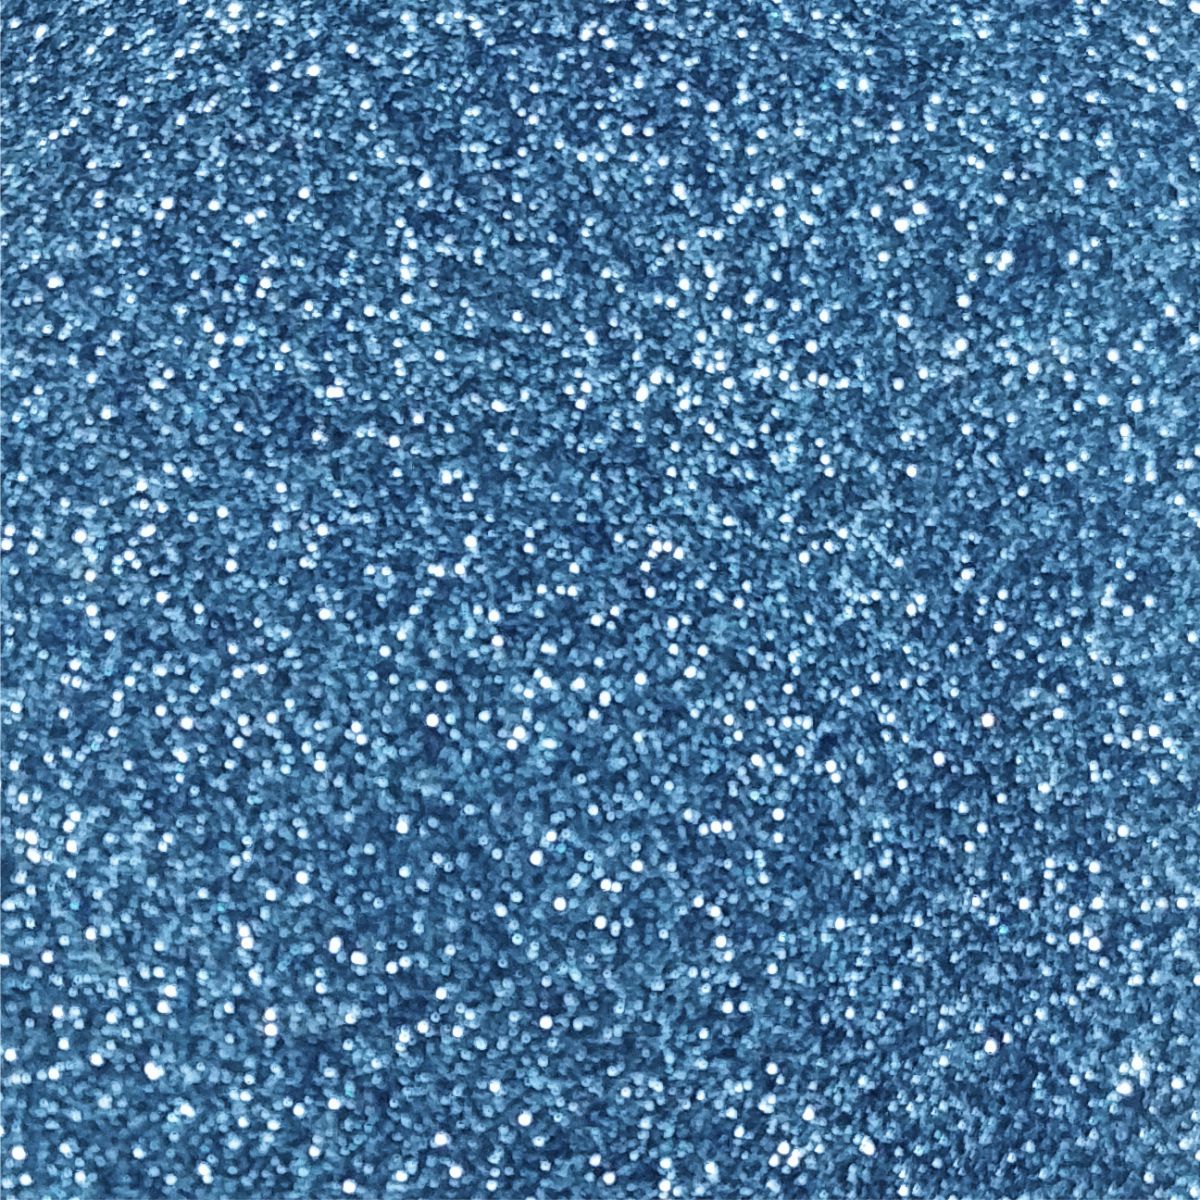 GlitterFlex Ultra Blue Glitter HTV